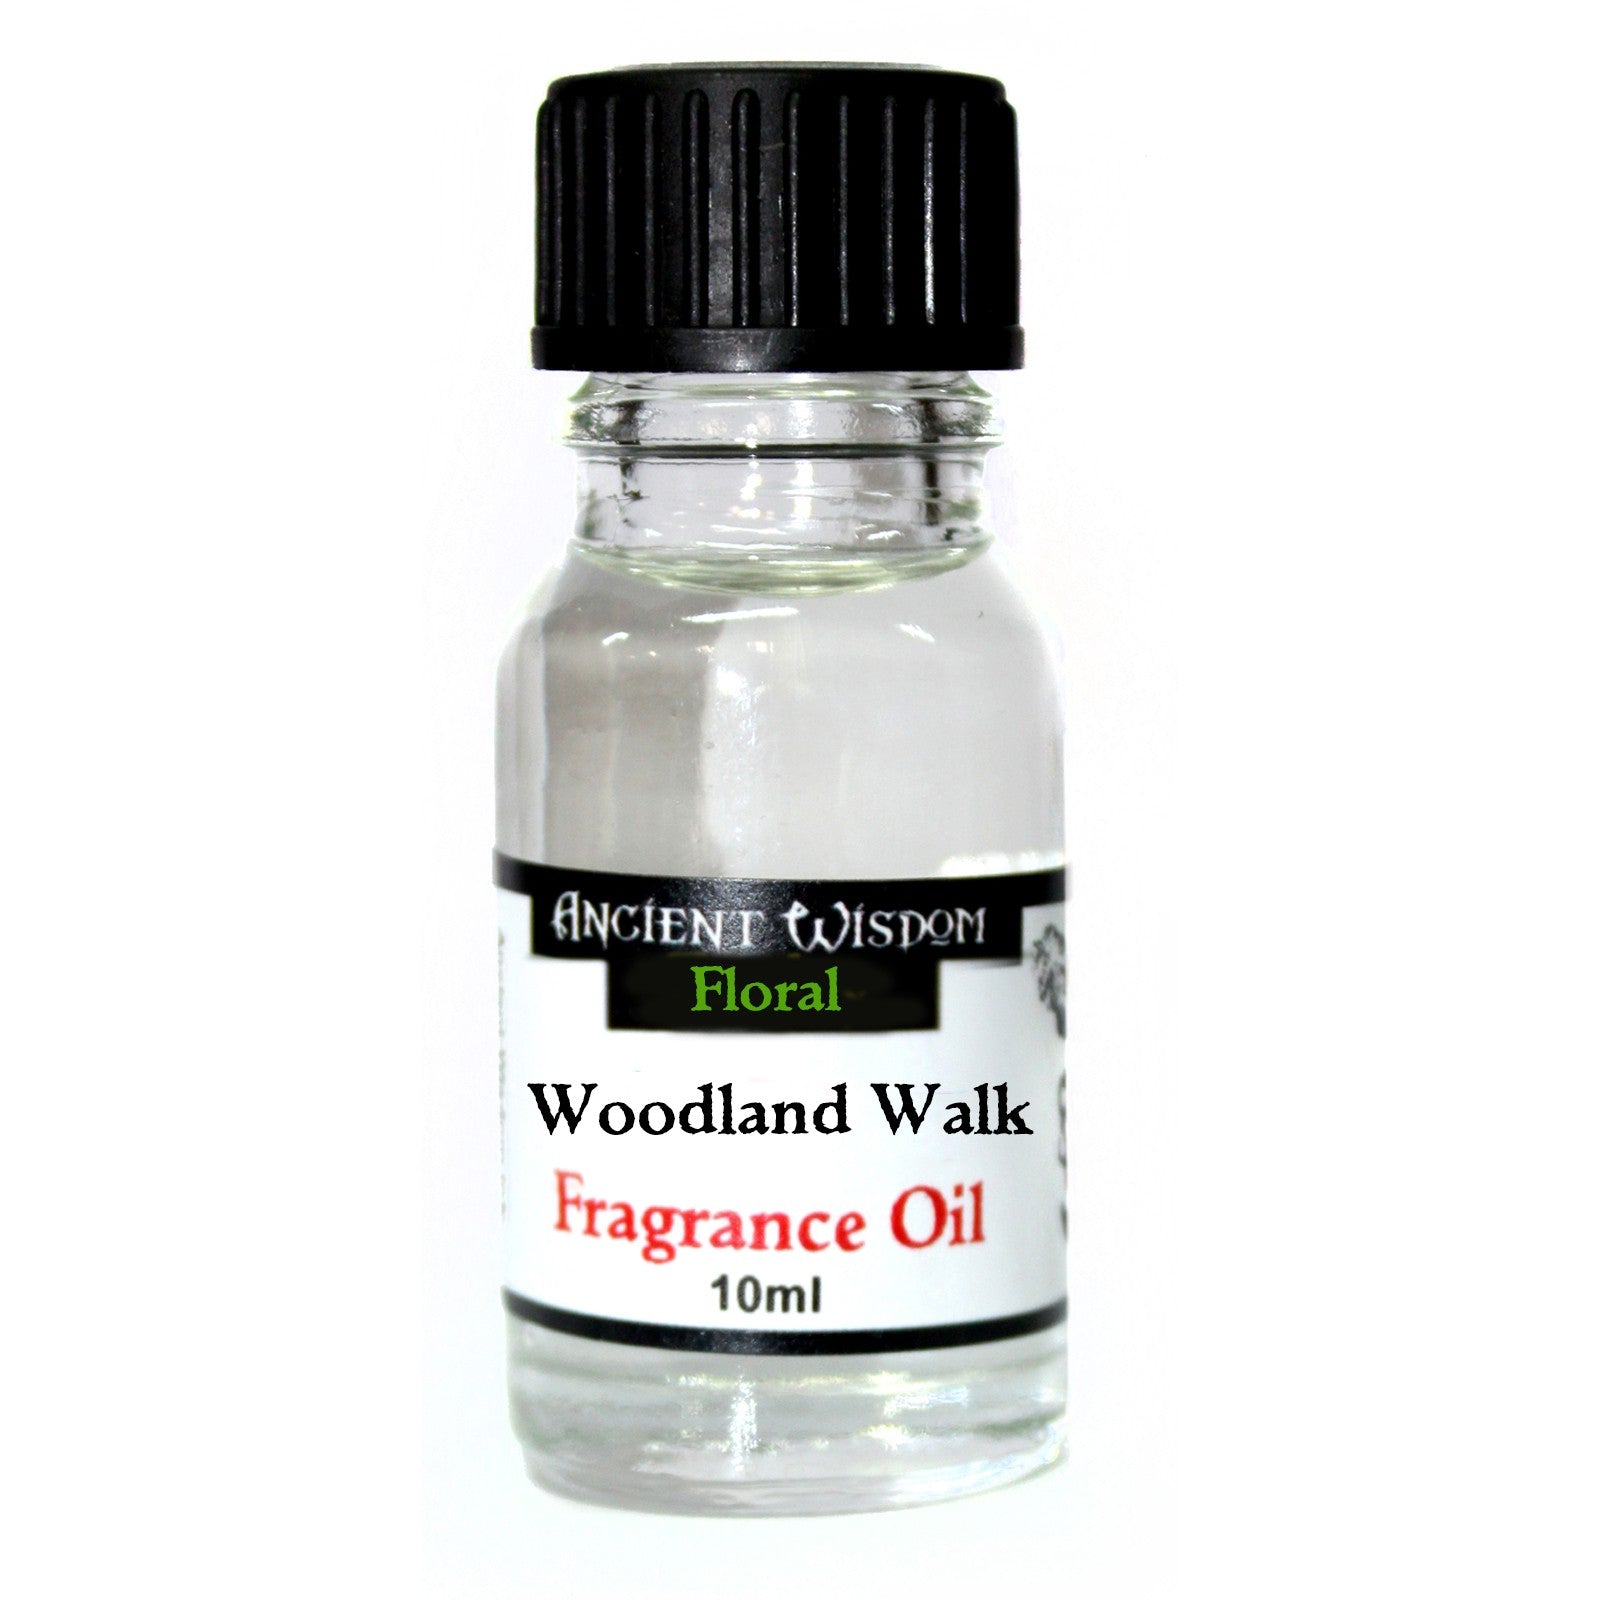 View 10ml Woodland Walk Fragrance Oil information